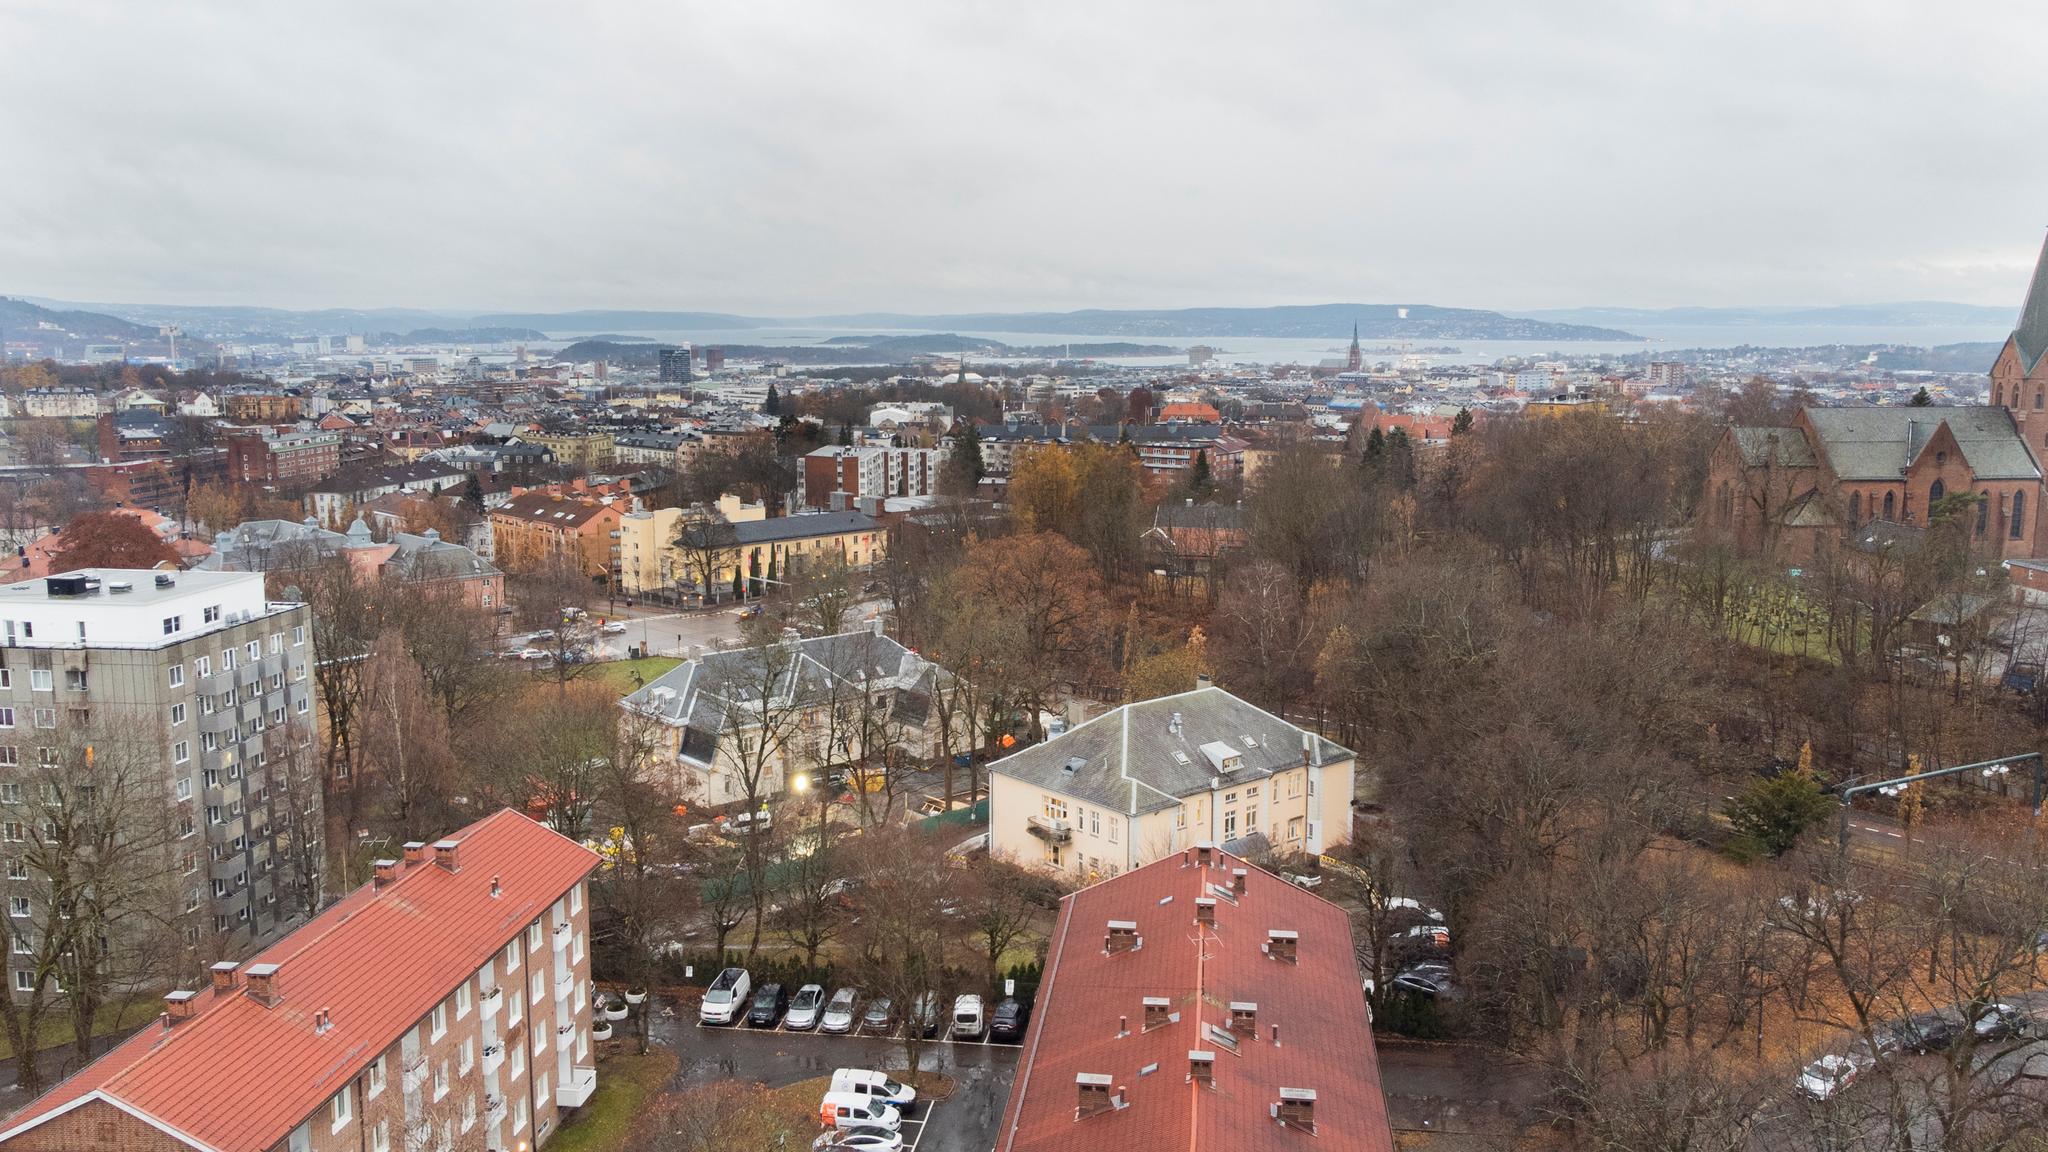 Boligmarkedet i Oslo er ikke for alle. I to sentrumsbydeler er eierne i mindretall.